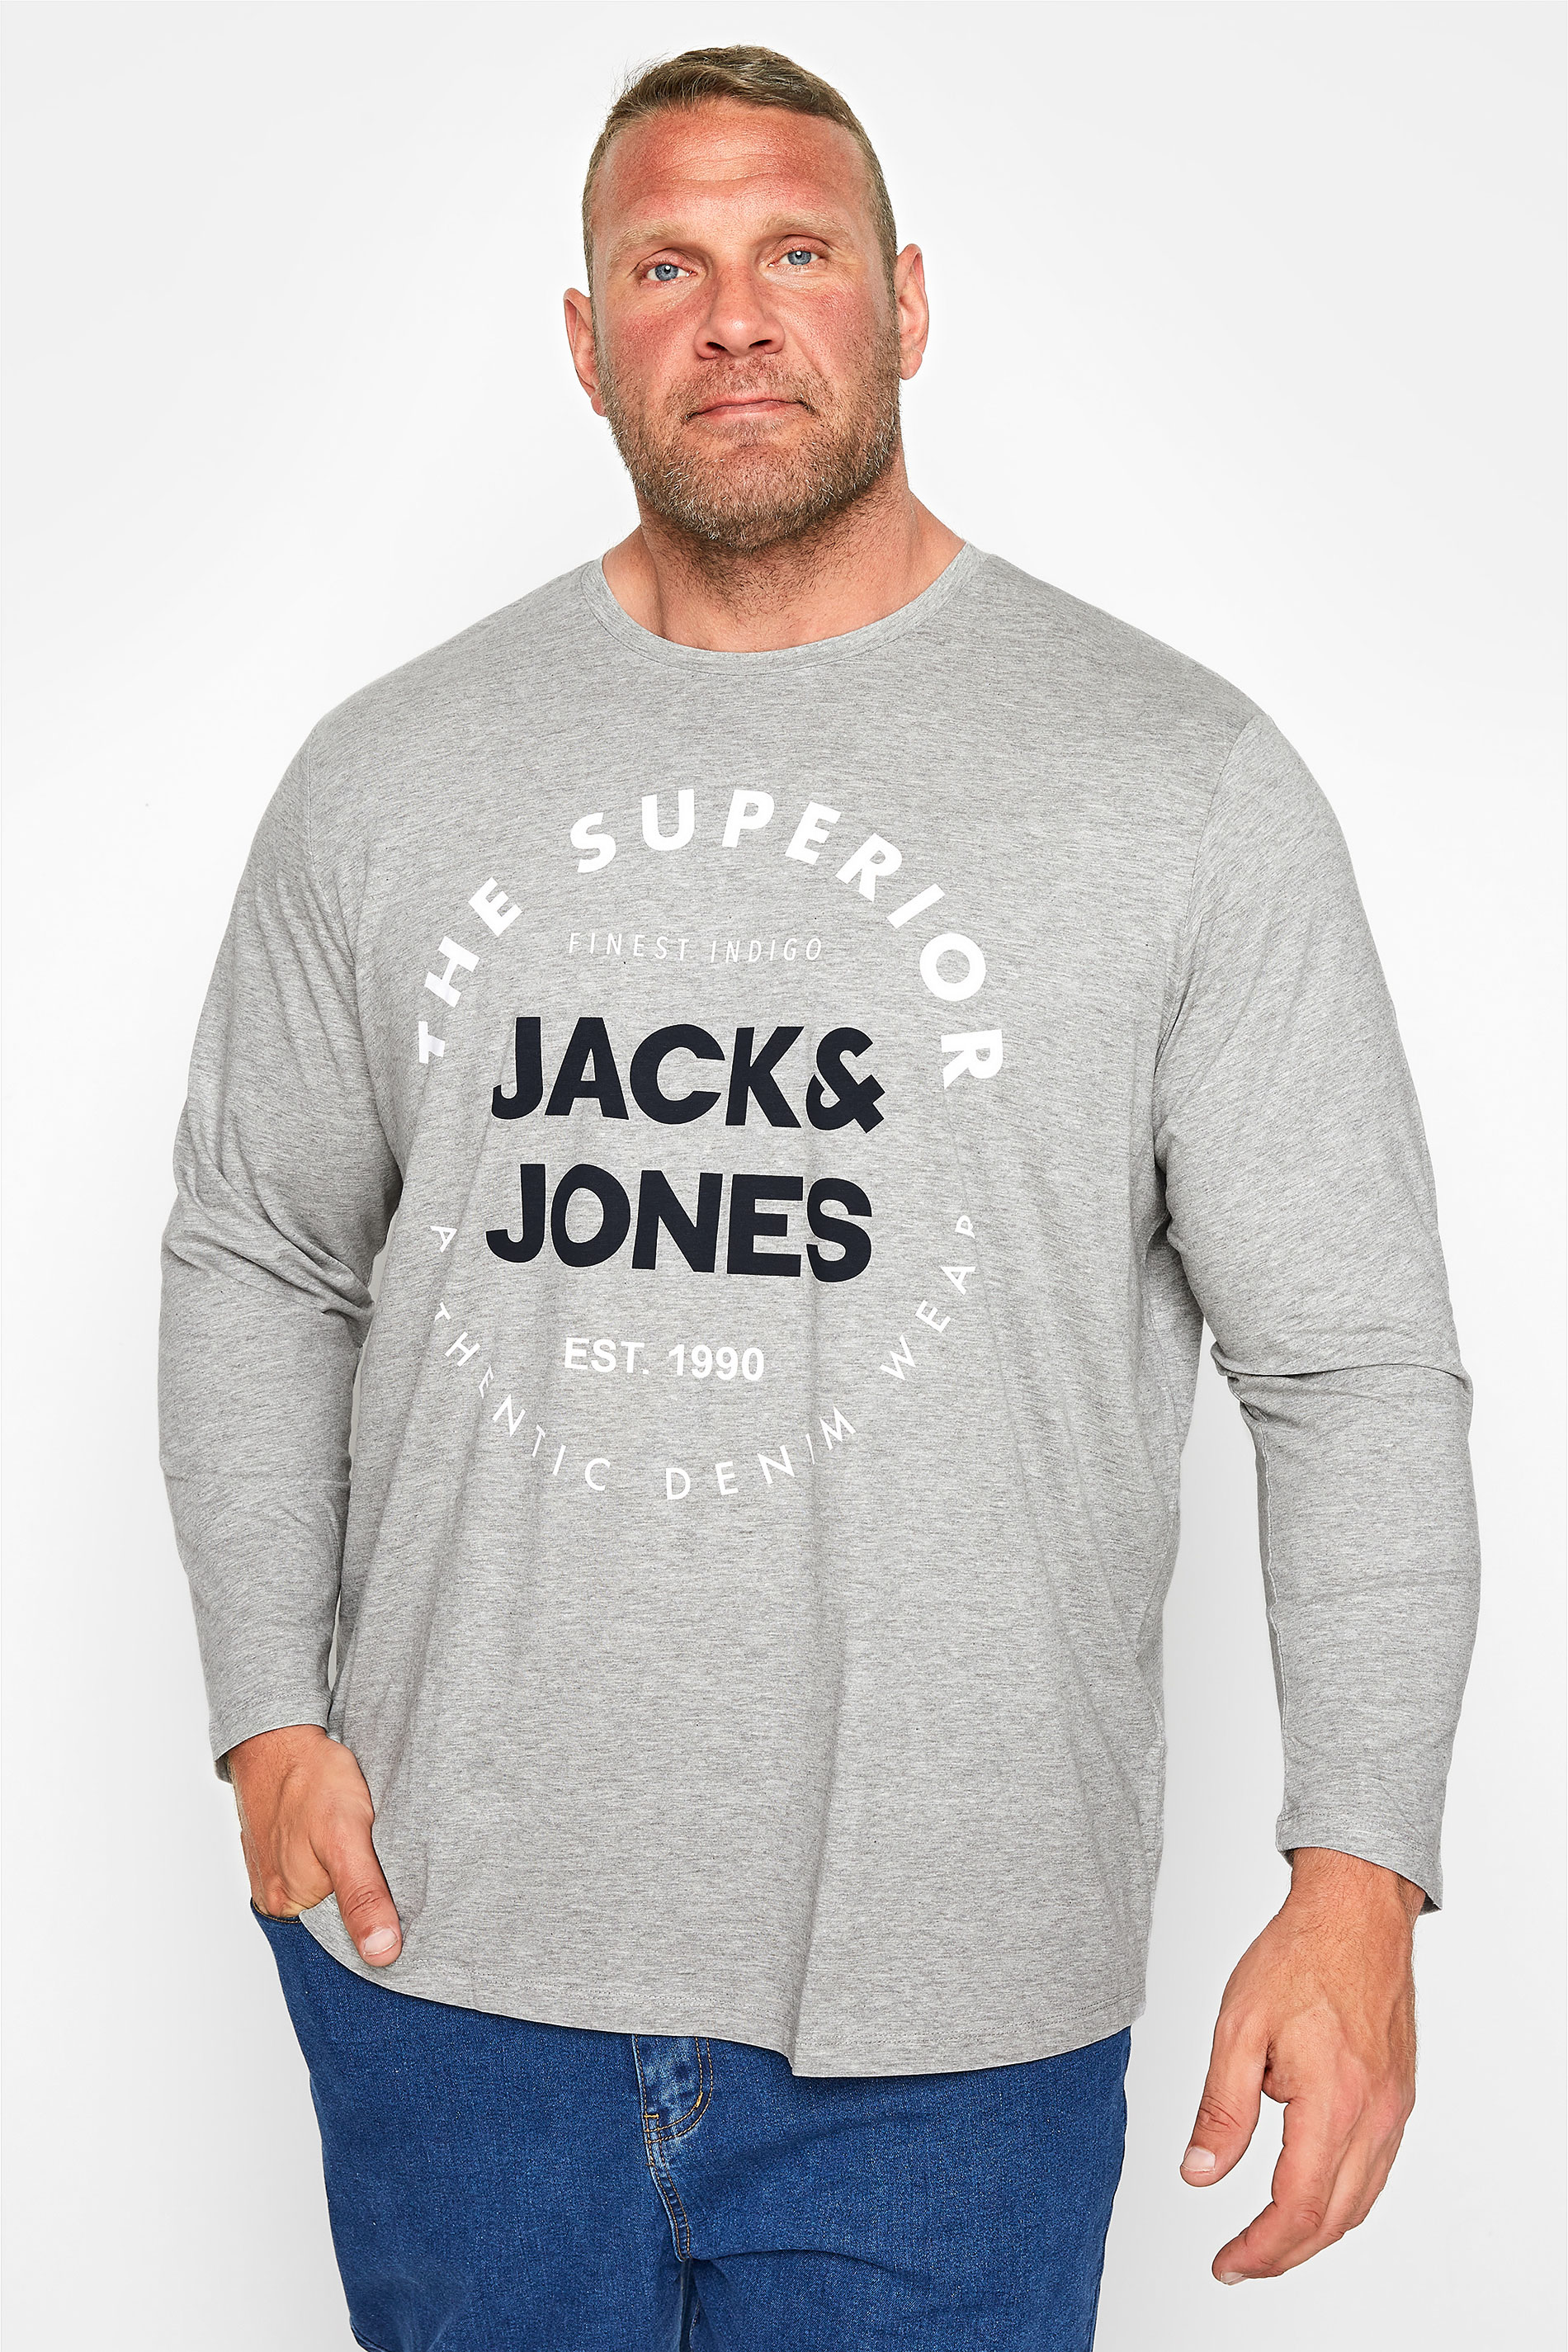 JACK & JONES Grey Herro Long Sleeve T-Shirt_M.jpg